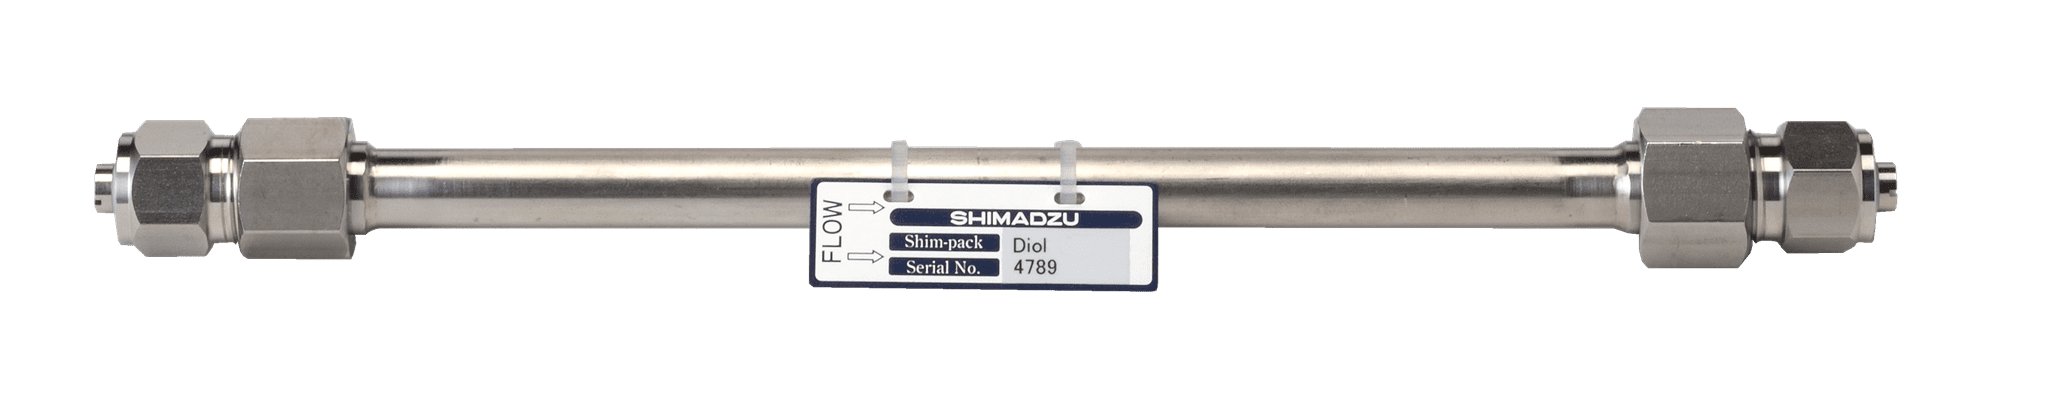 Obrázek Shim-pack Diol-300; 5 µm; 500 x 7.9